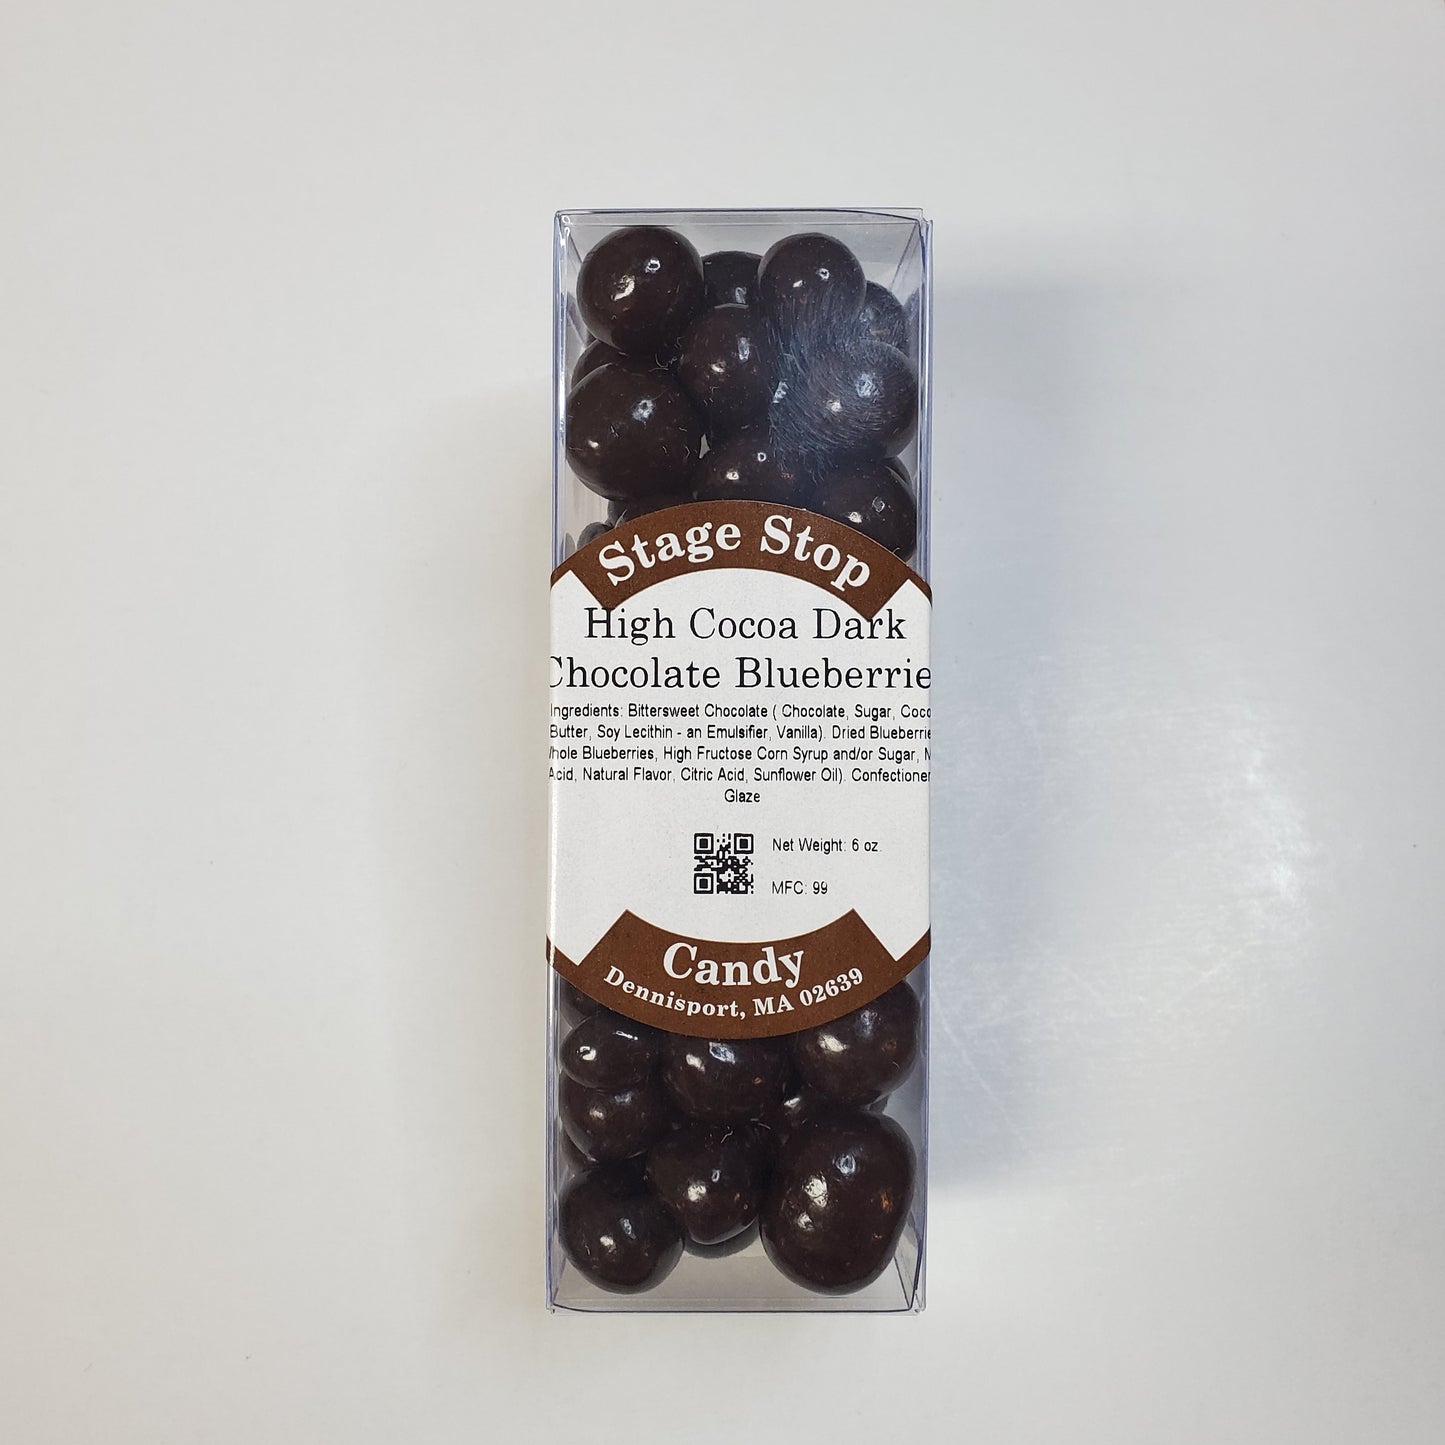 High Cocoa Dark Chocolate Blueberries